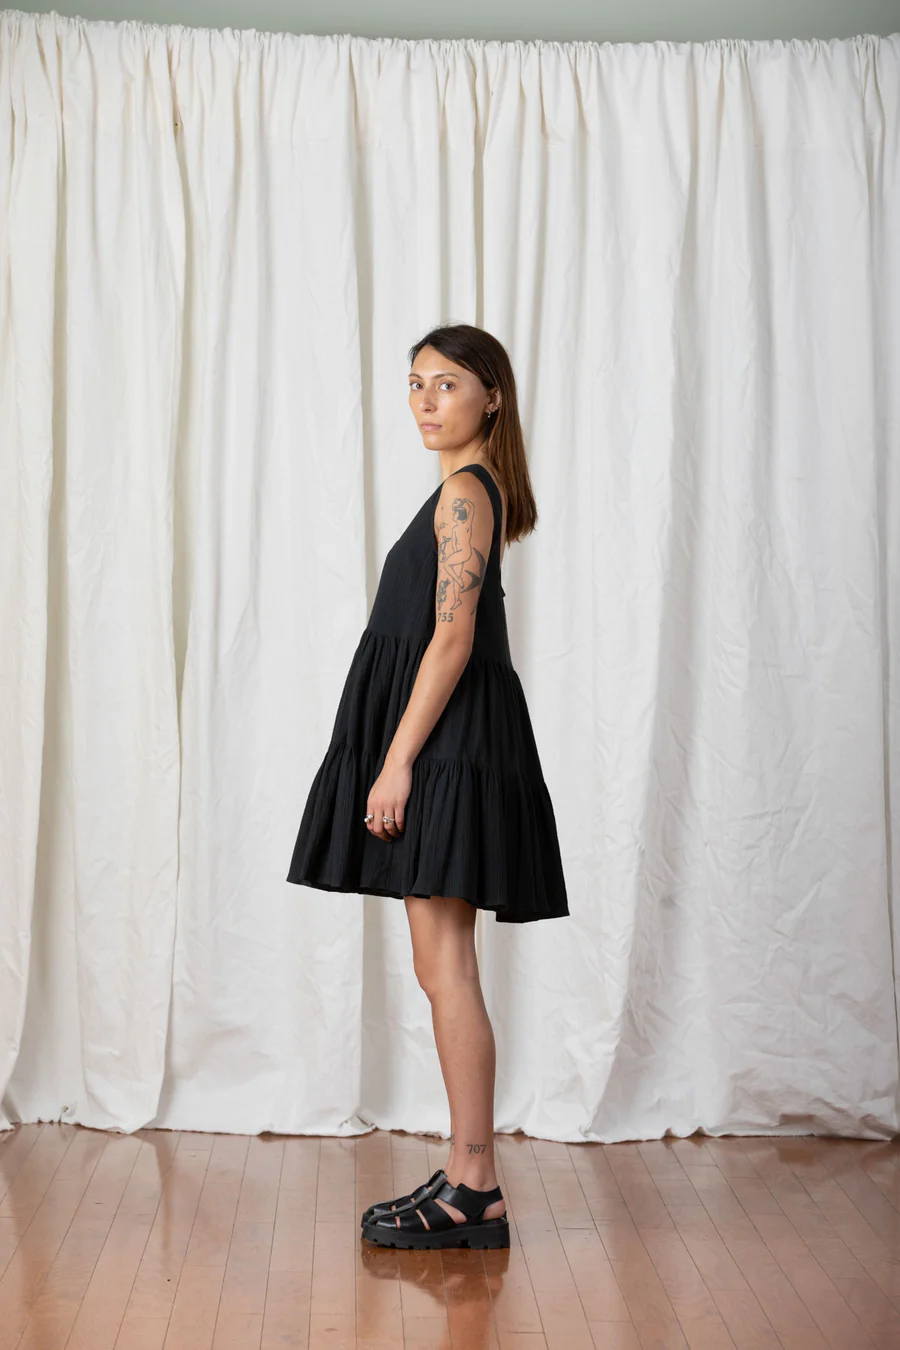 Product Image for Full Tank Dress, Black